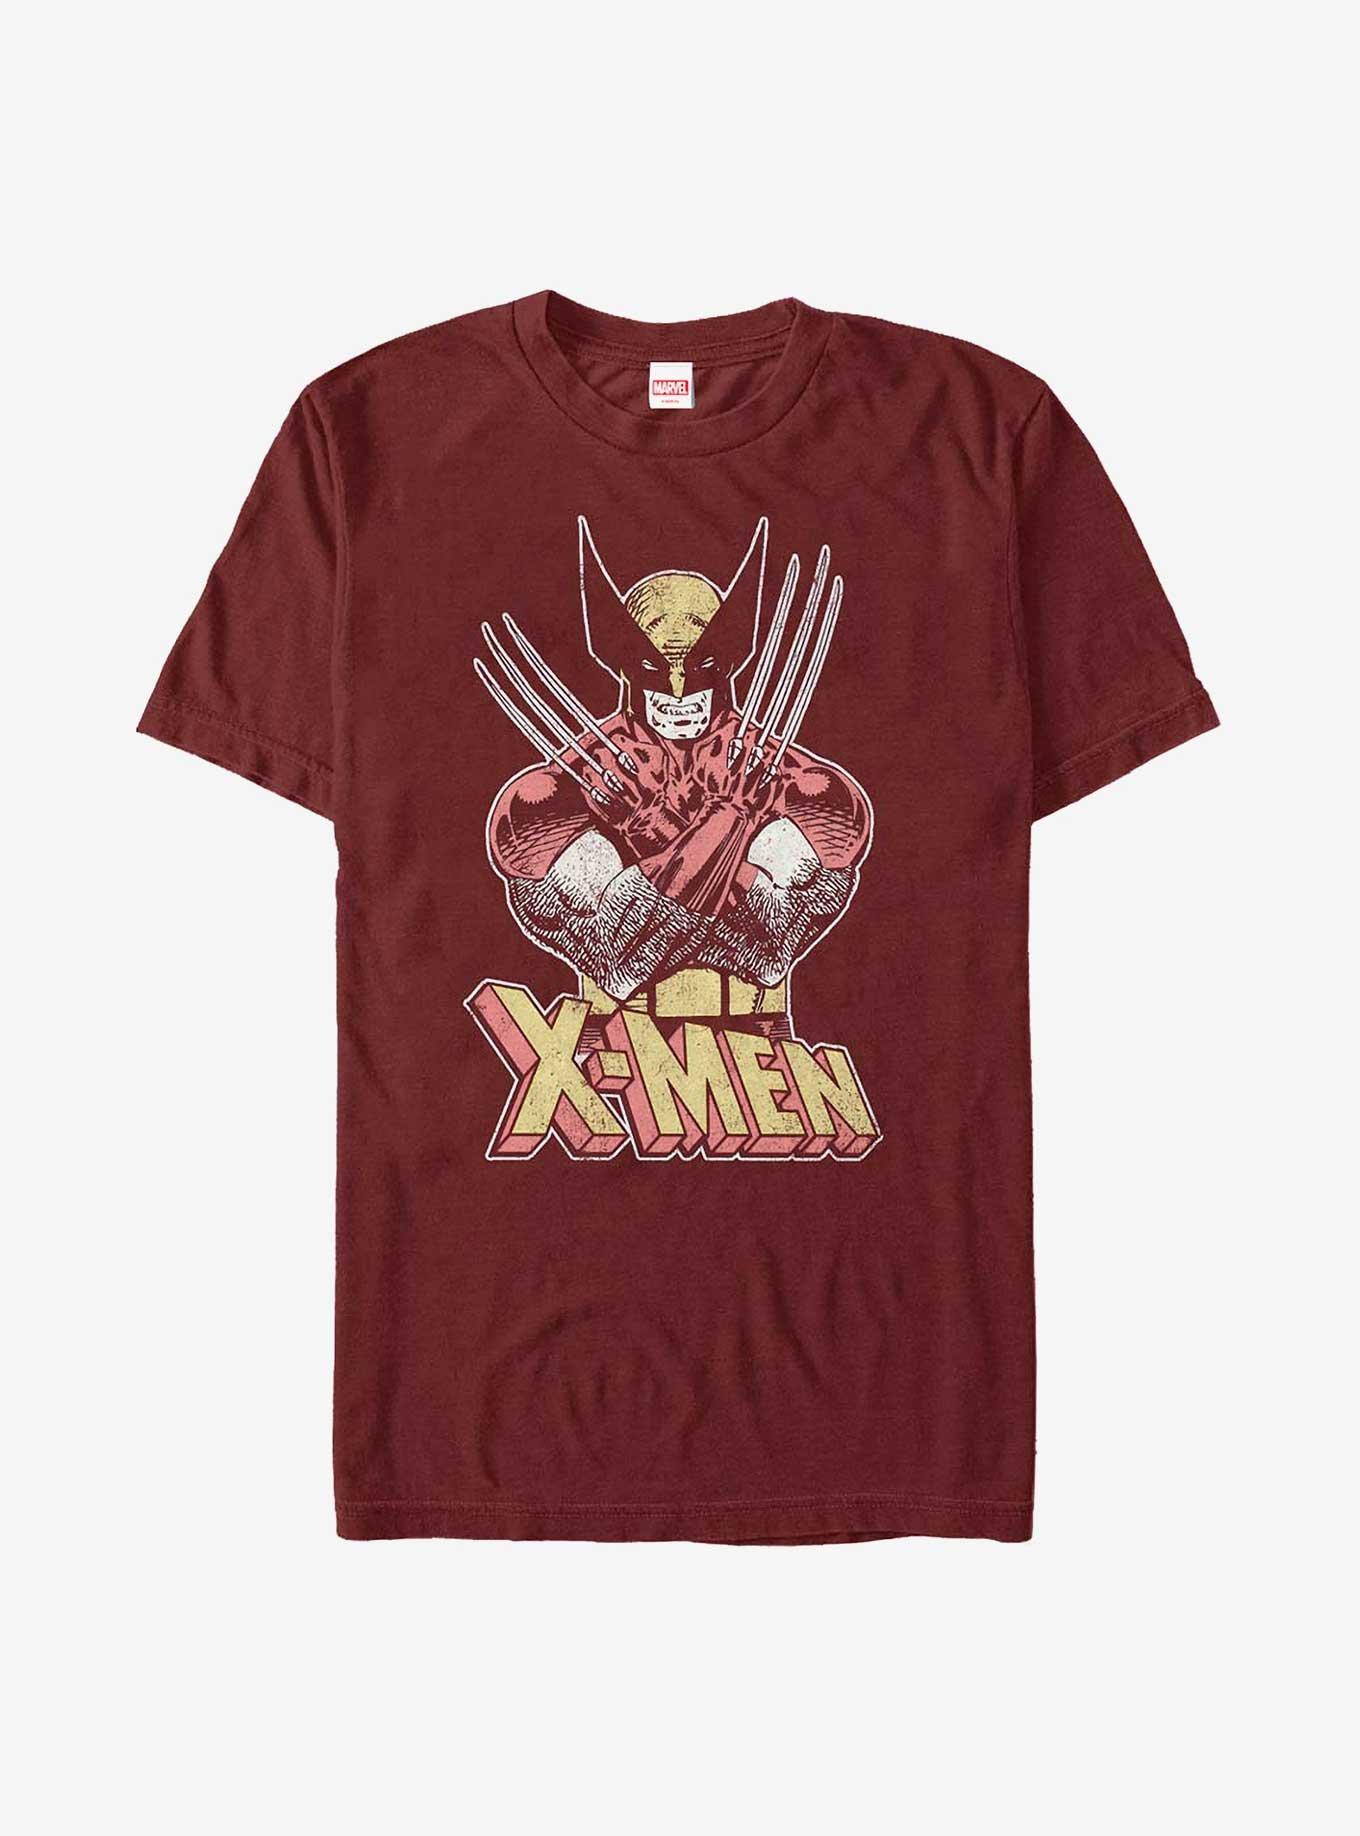  Marvel X-Men Wolverine Classic Retro Costume T-Shirt : Clothing,  Shoes & Jewelry